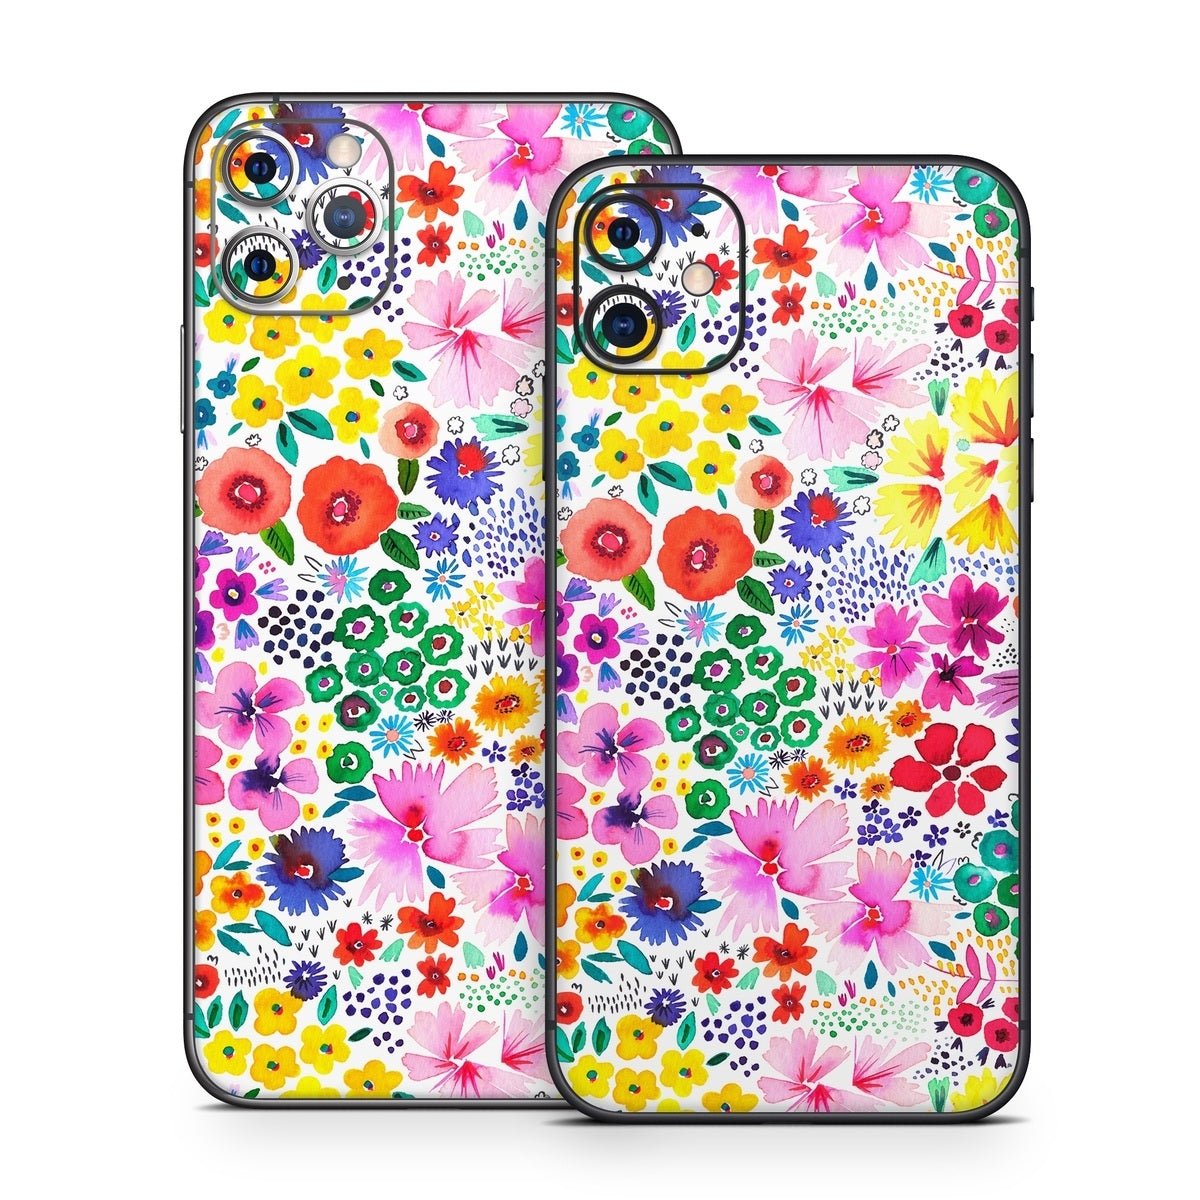 Artful Little Flowers - Apple iPhone 11 Skin - Ninola Design - DecalGirl